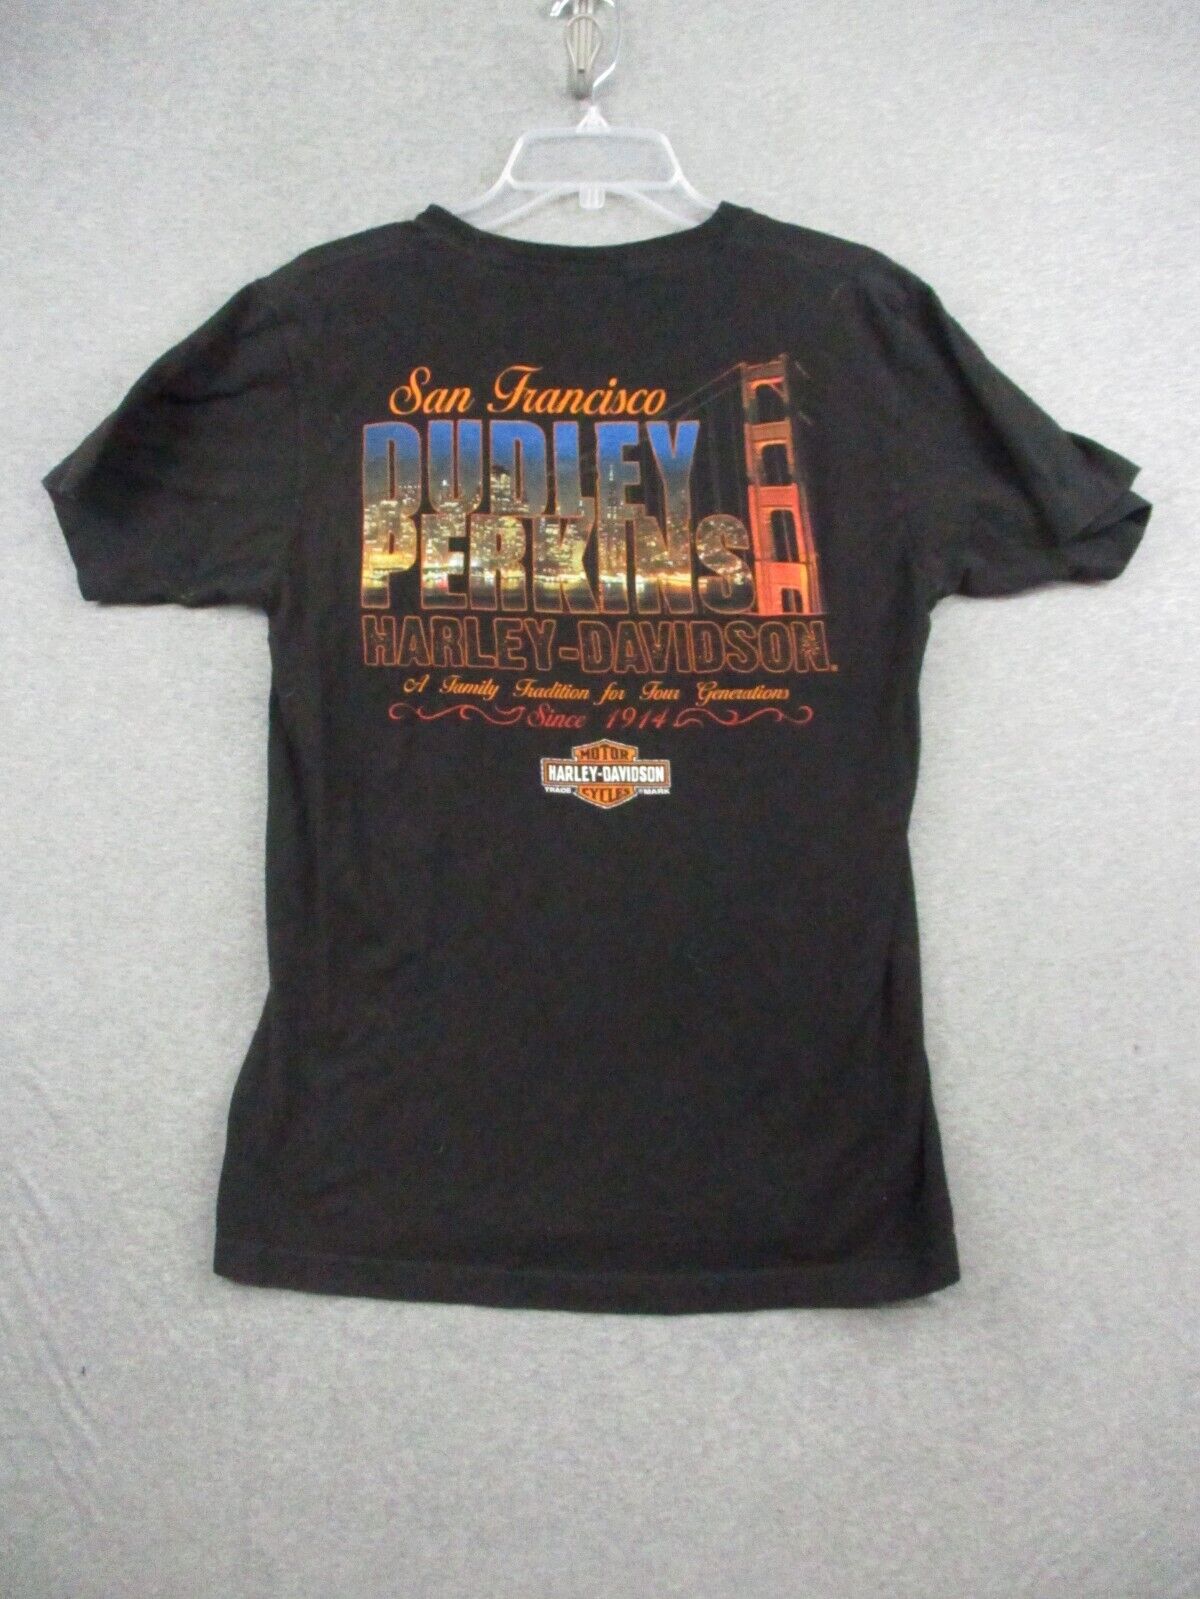 Vintage DUDLEY PERKINS CO, Harley Davidson Black USA T-Shirt, Medium